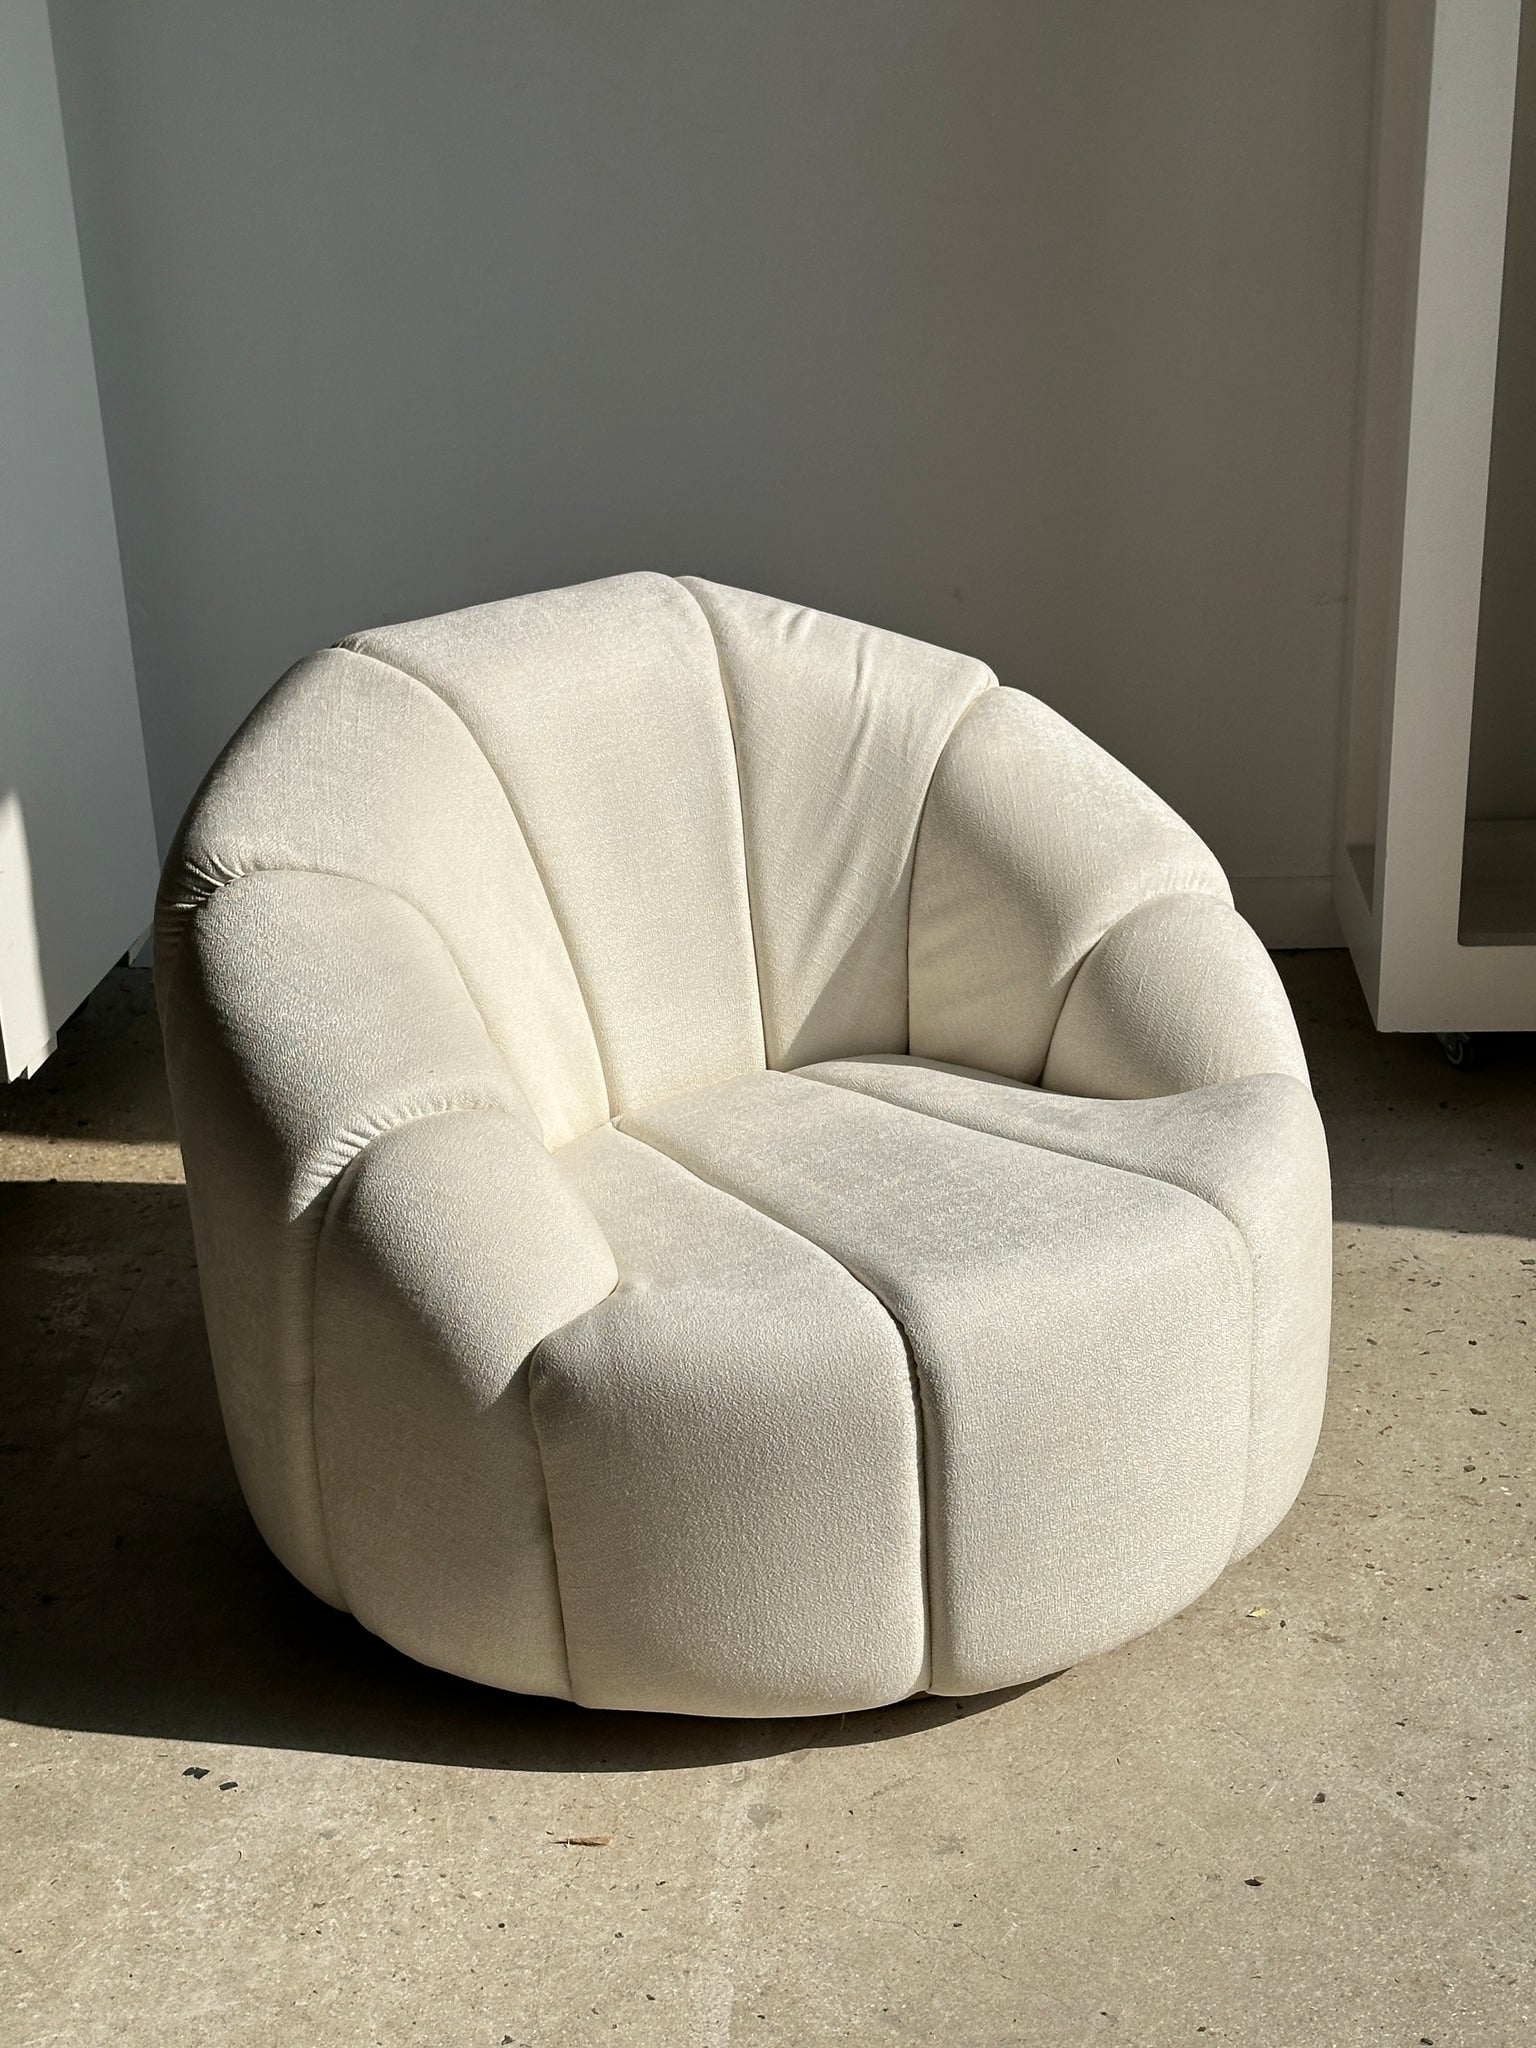 Grand fauteuil blanc de repos de forme circulaire, garniture tissus blanc